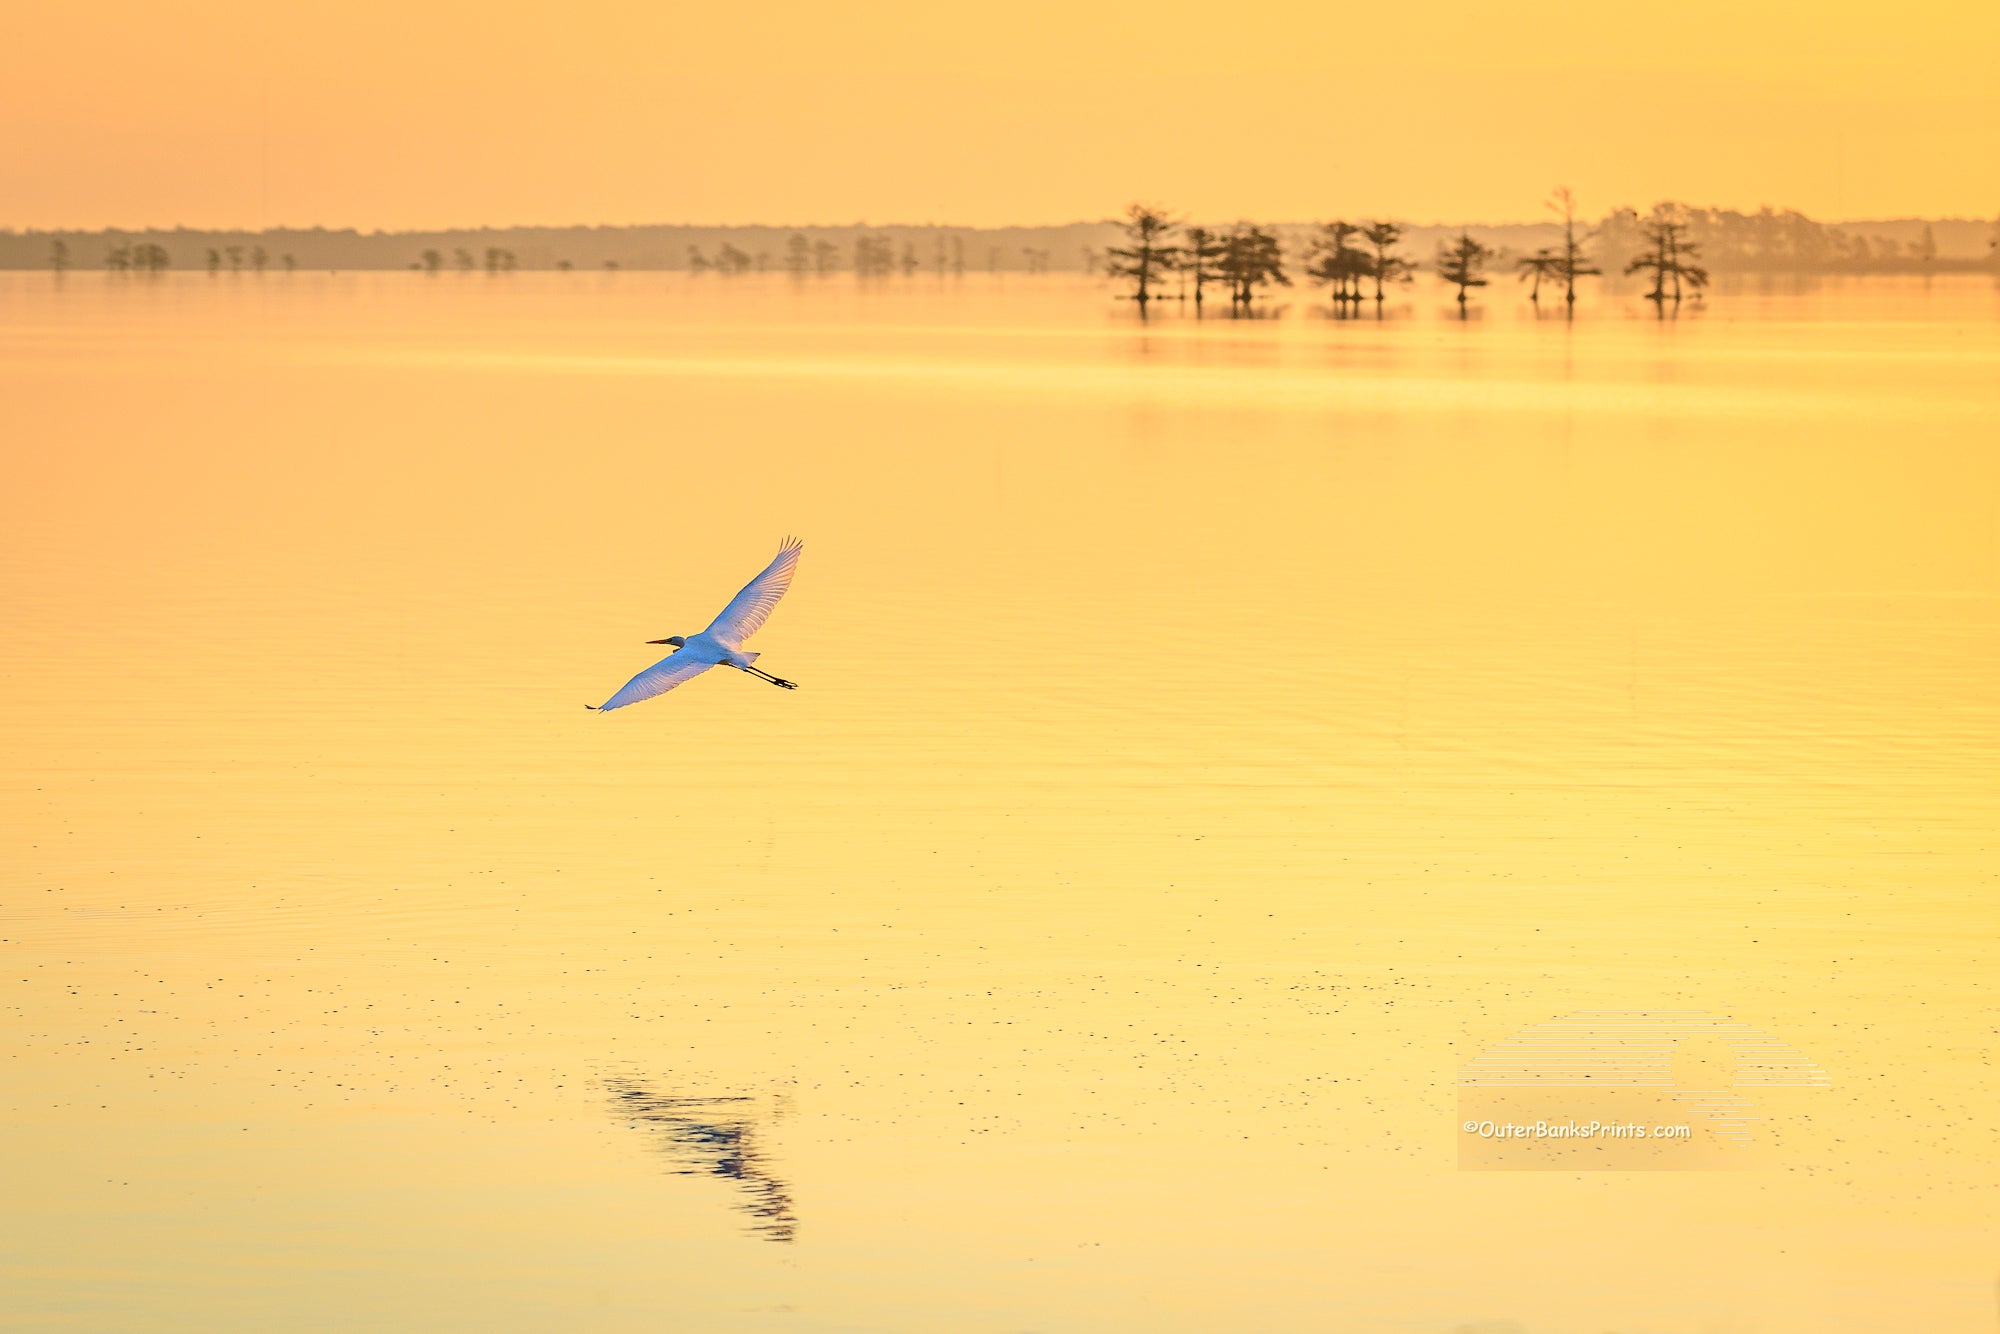 Golden sunrise and a Great Egret in flight at Lake Mattamuskeet, eastern North Carolina.